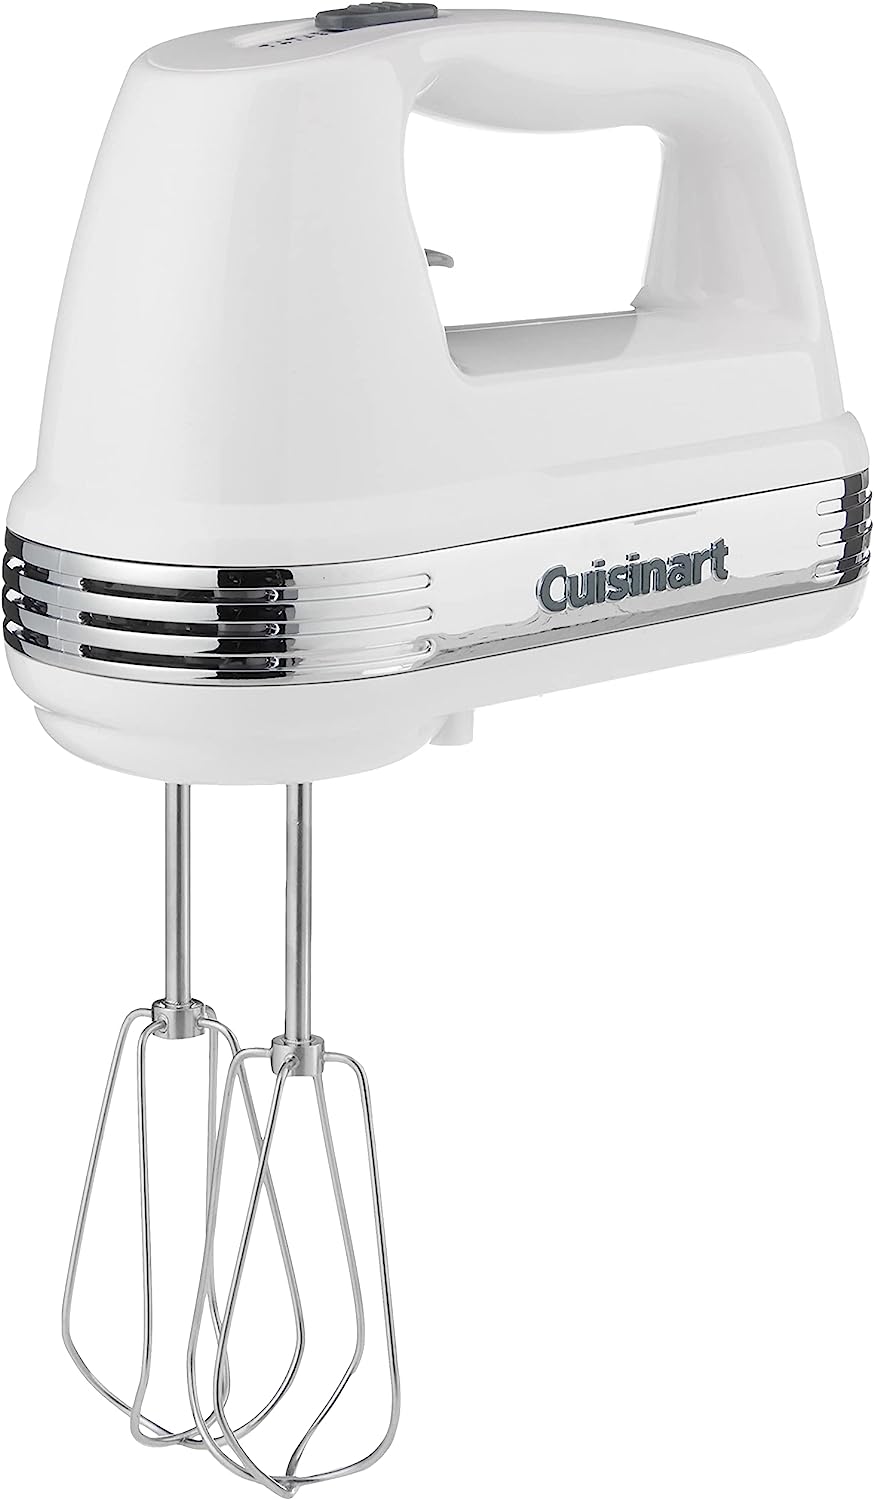 Cuisinart Power Advantage 5-Speed Hand Mixer - White (New)